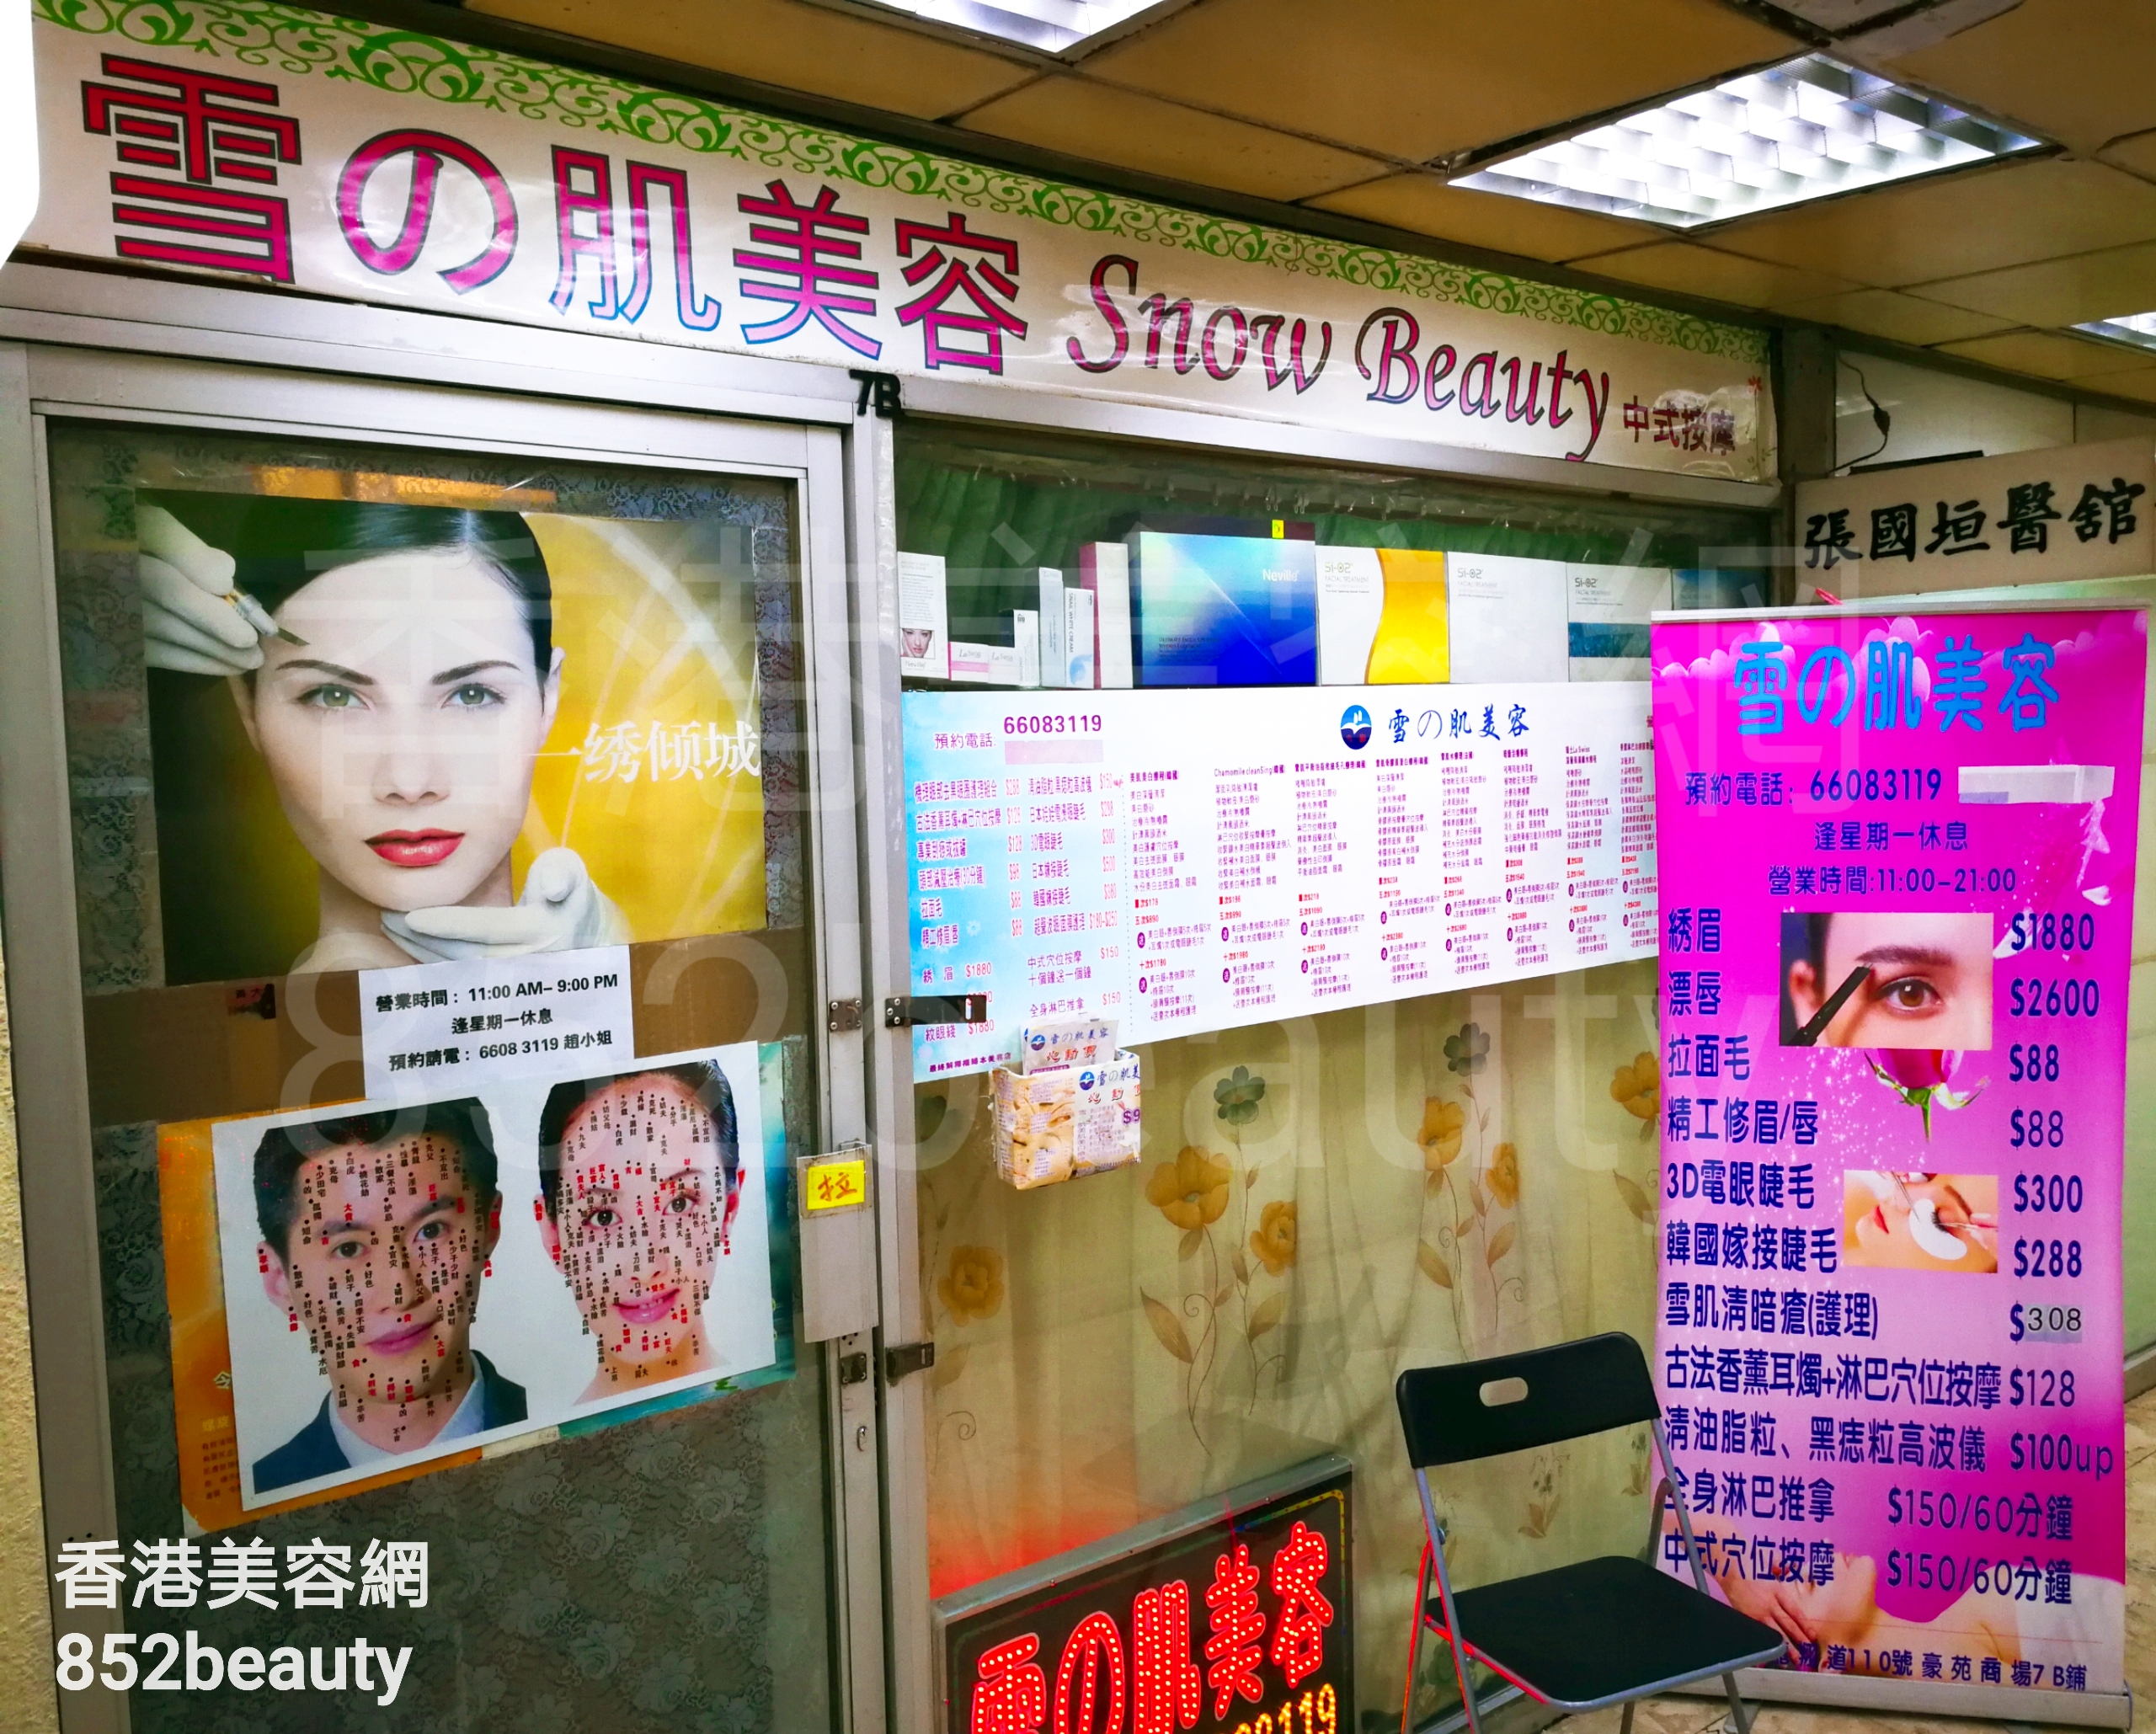 香港美容網 Hong Kong Beauty Salon 美容院 / 美容師: 雪の肌美容